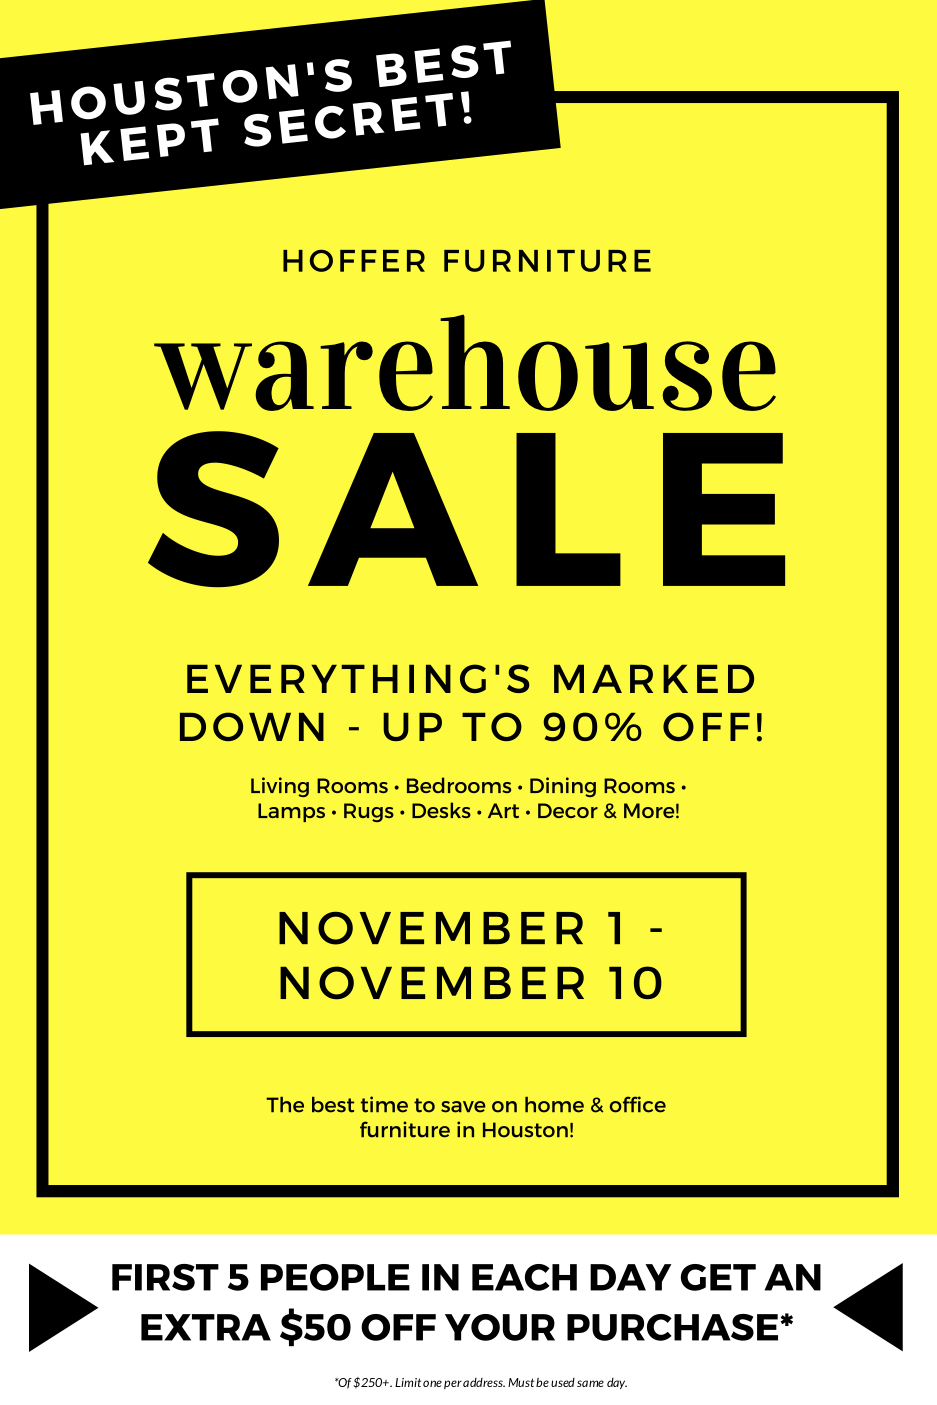 Warehouse Sale 2019 Hoffer Furniture